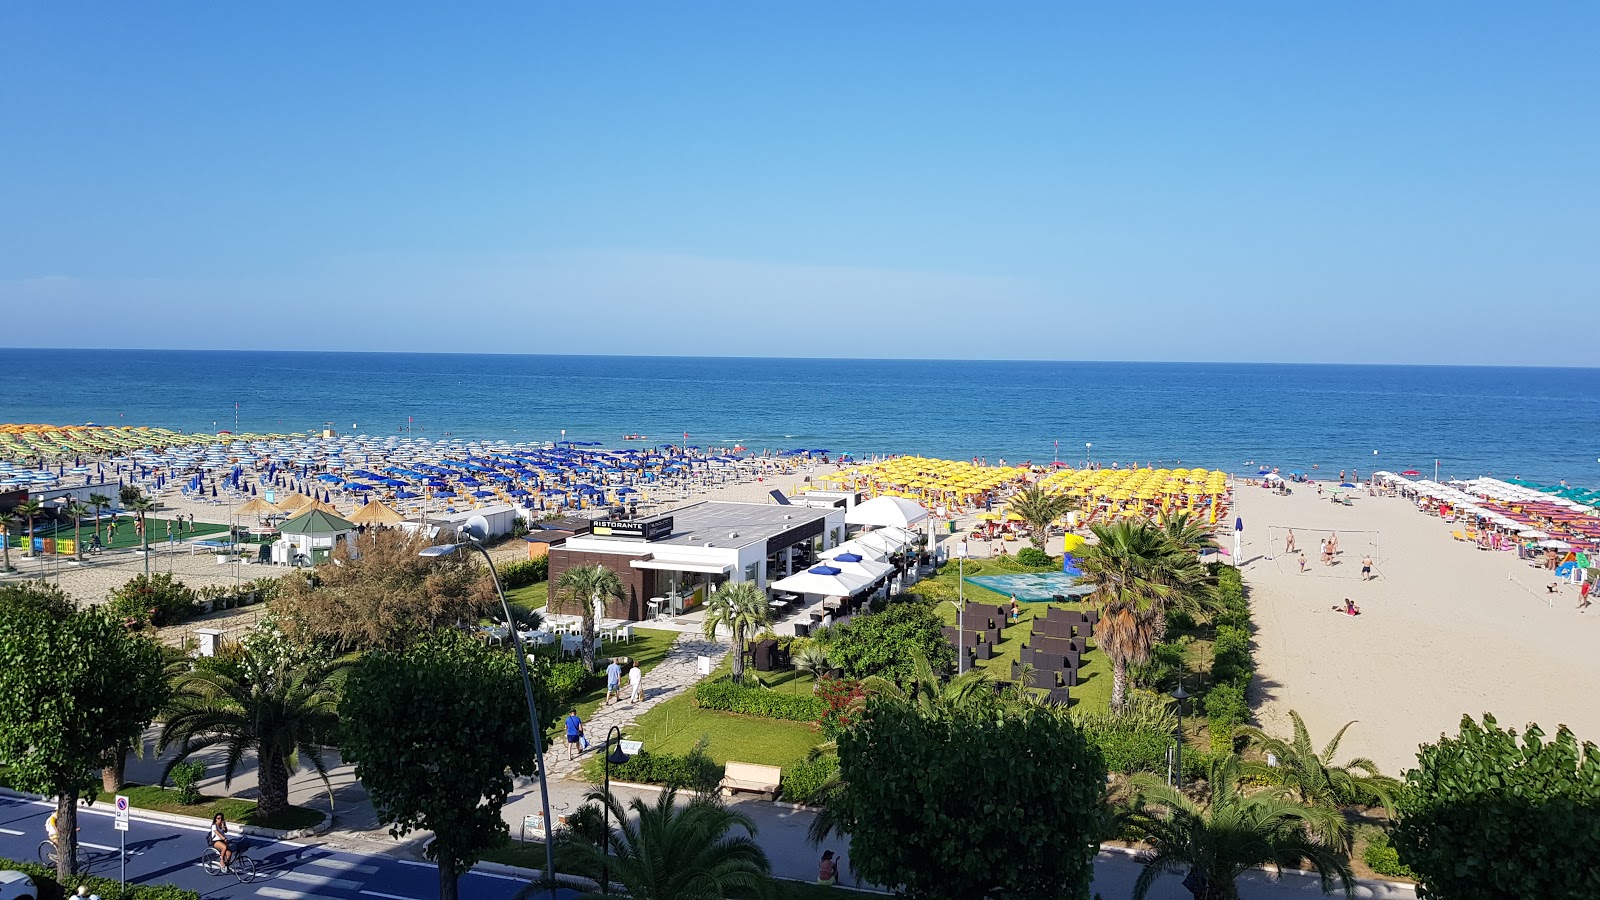 Foto de Spiaggia di Alba Adriatica com reto e longo